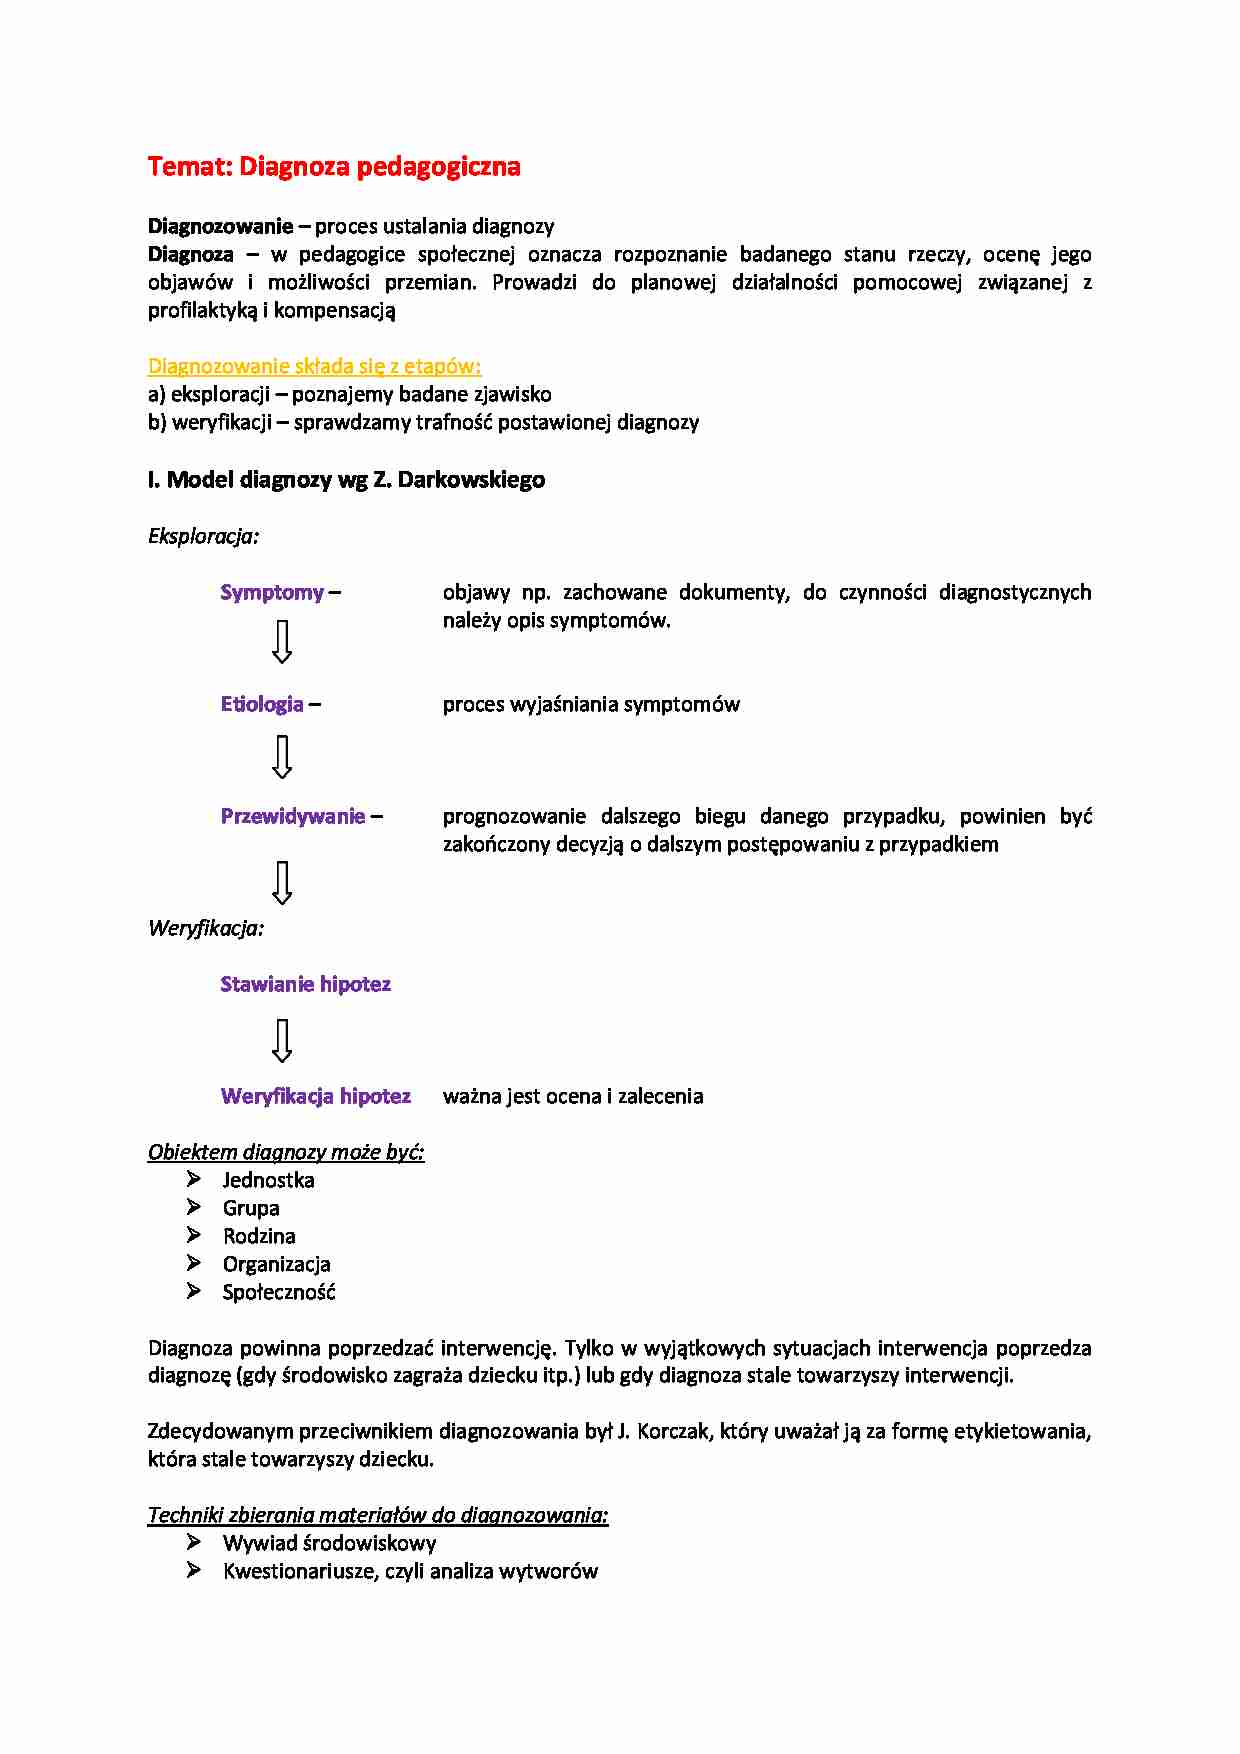 Diagnoza pedagogiczna - modele  - strona 1